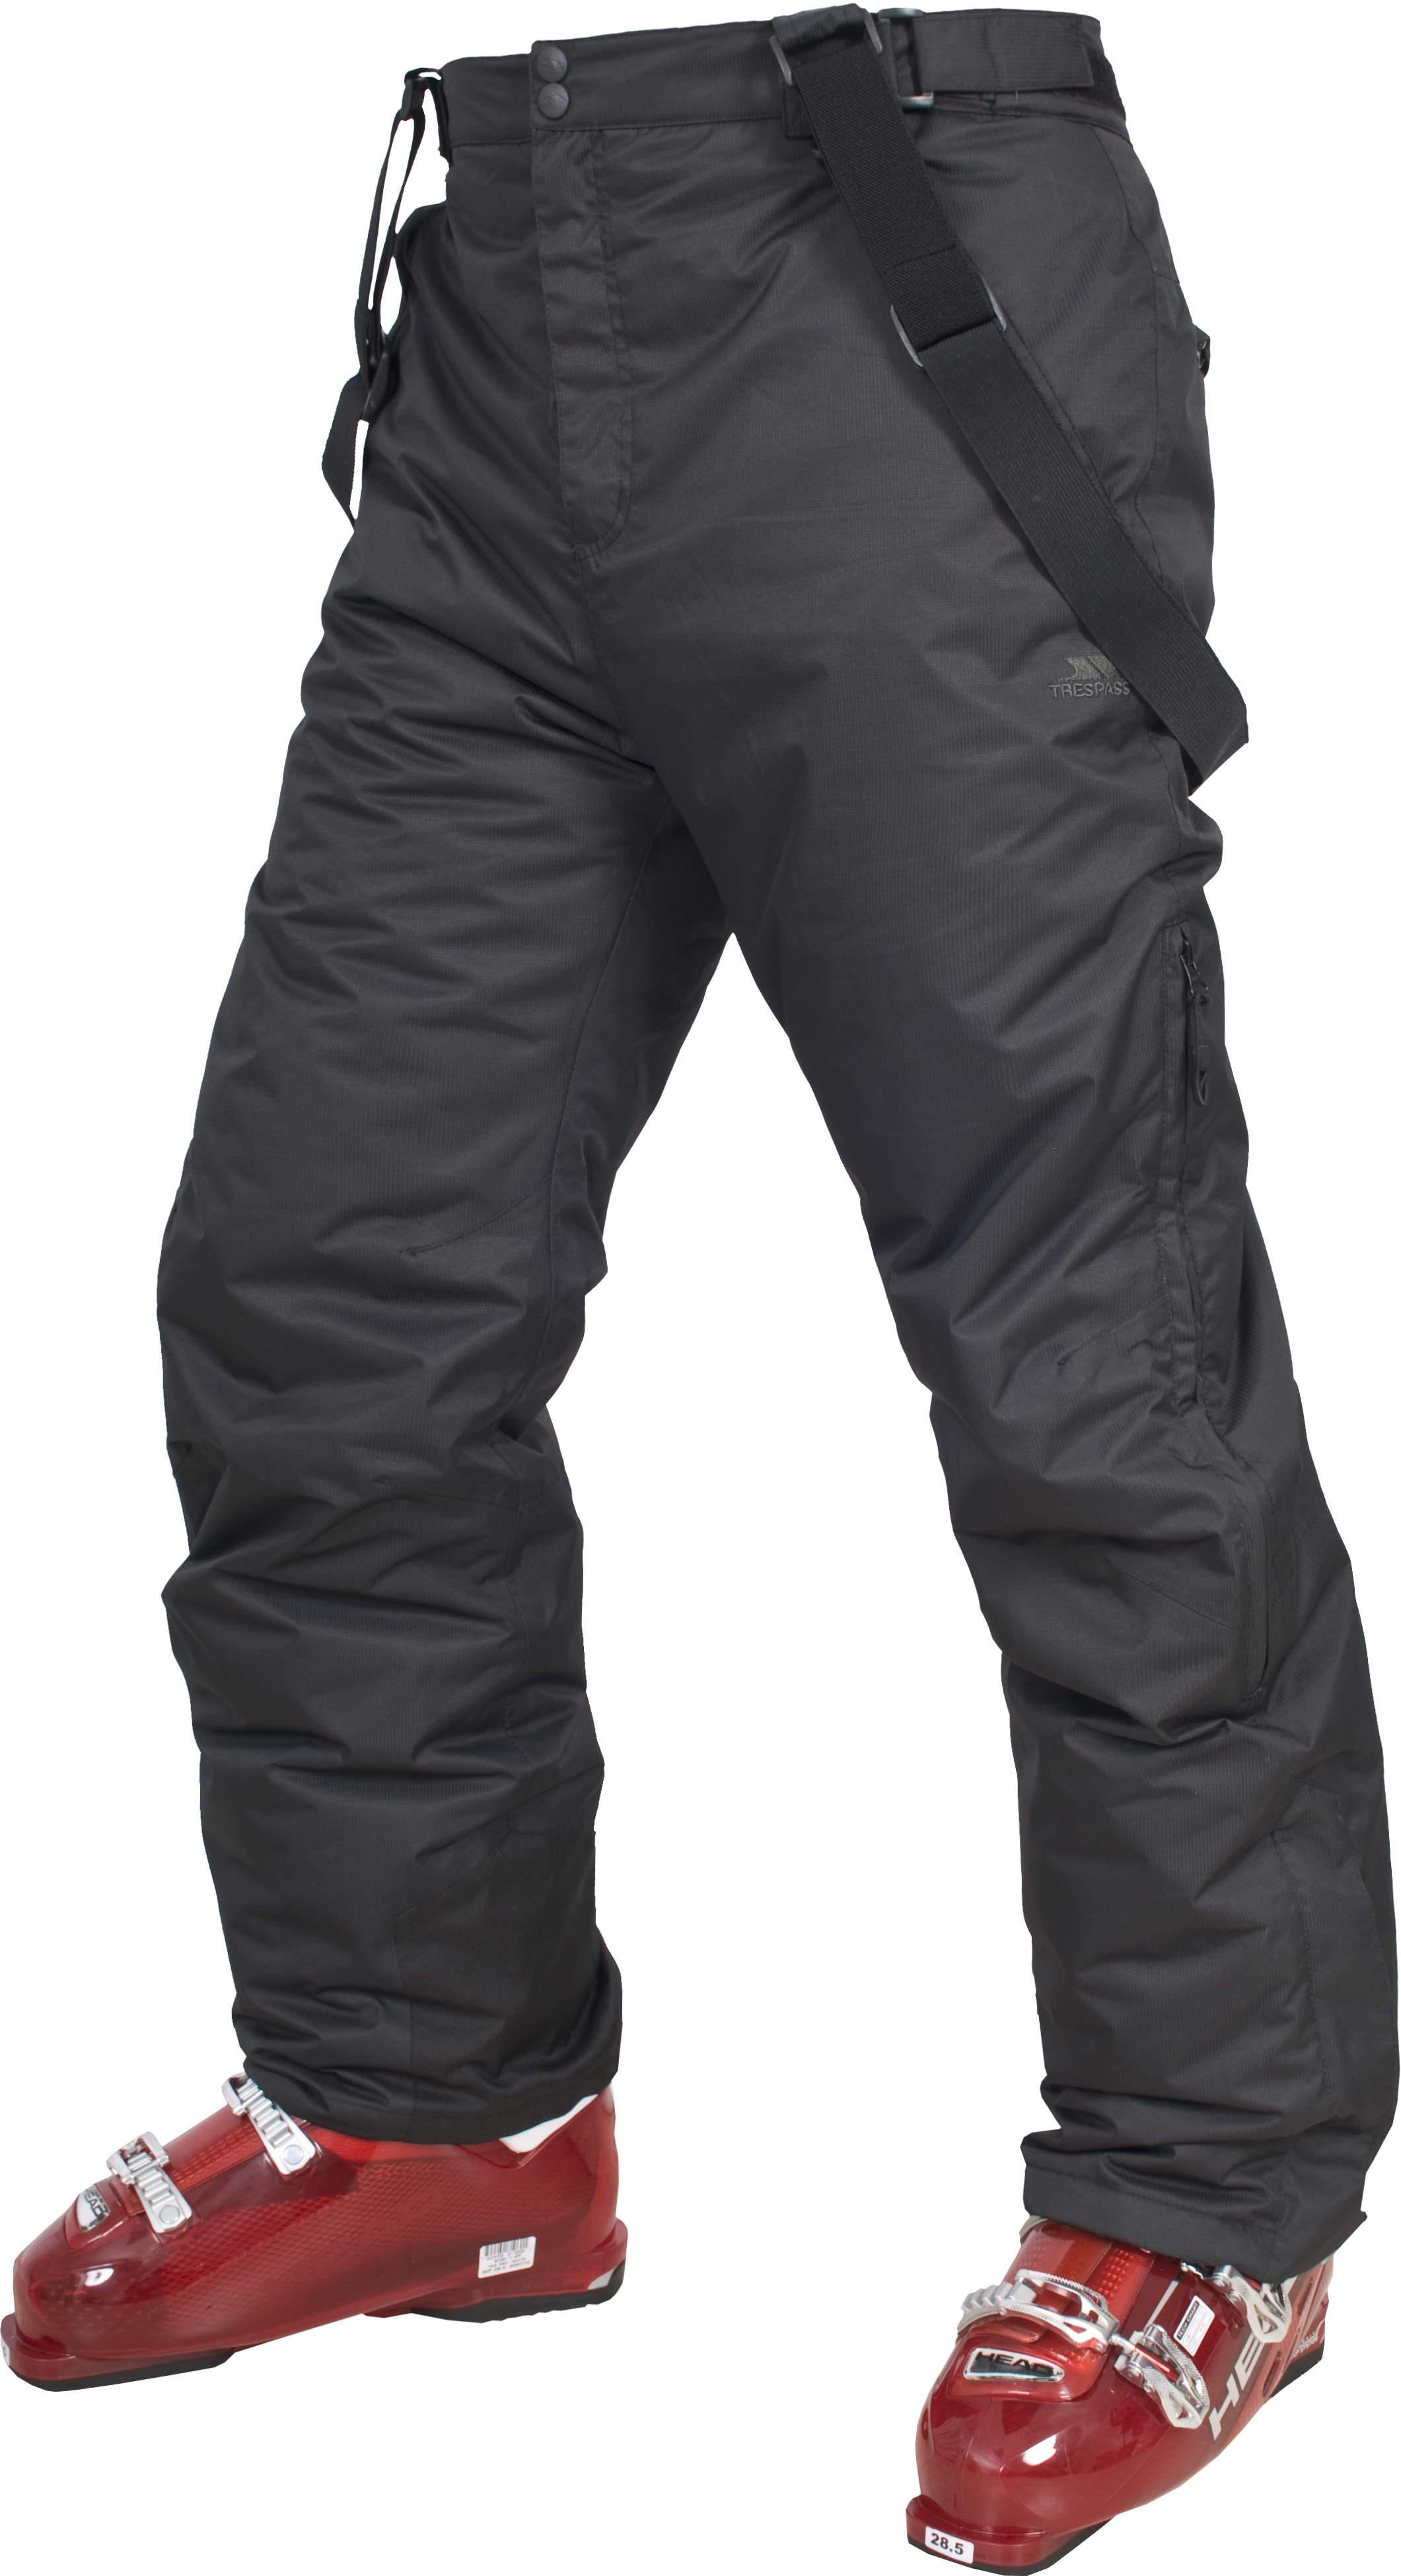 Trespass Bezzy Men's Ski Pants - Black by Trespass for £50.00